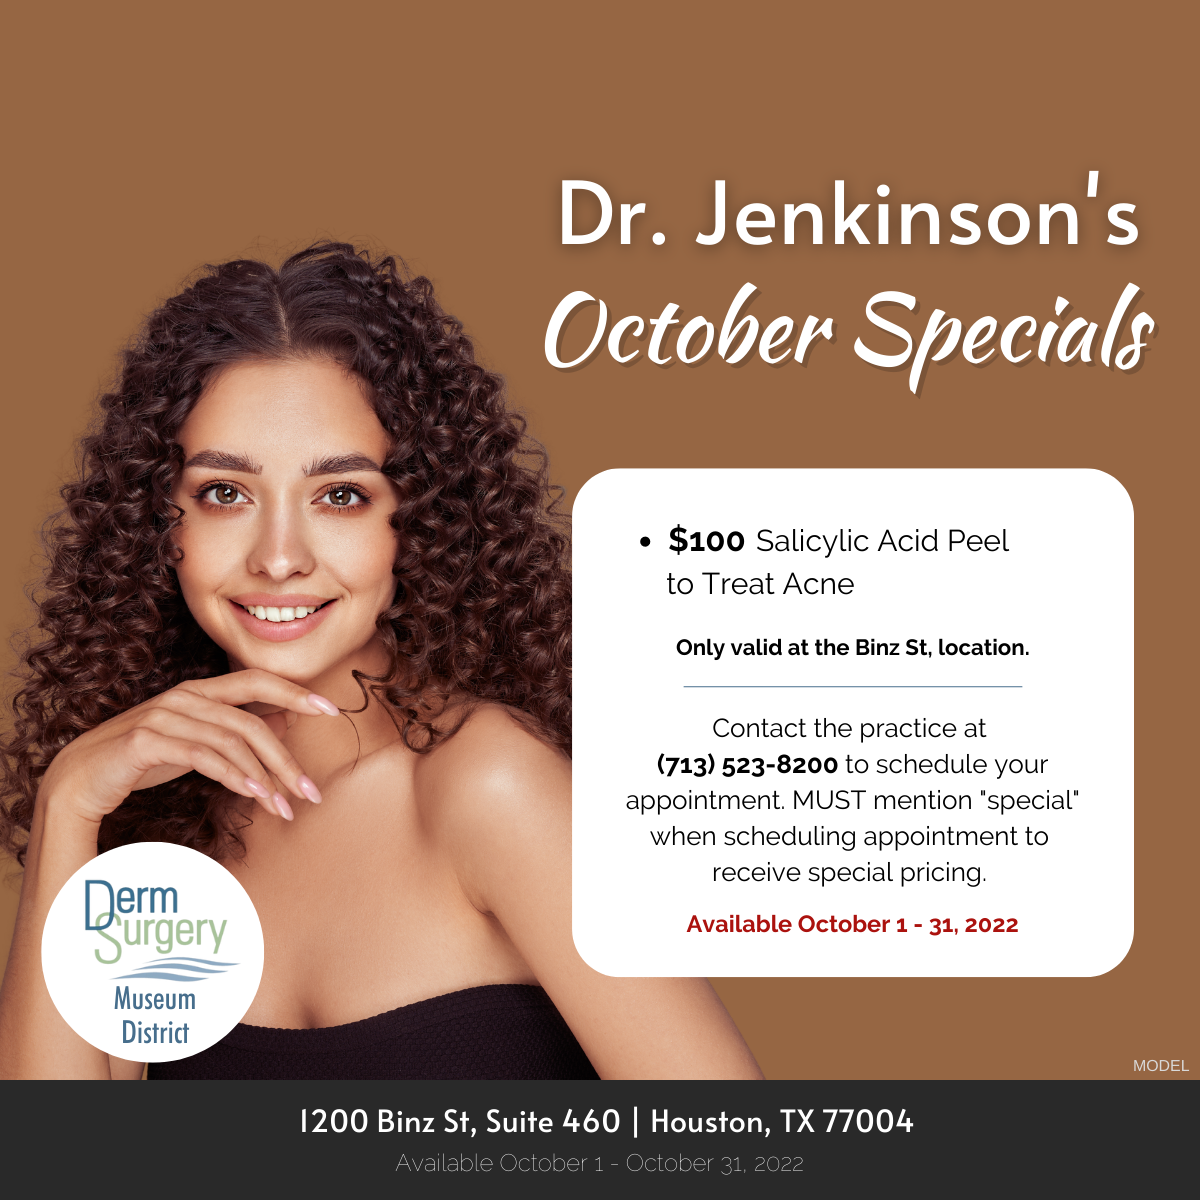 Dr. Jenkinson's October Specials 2022